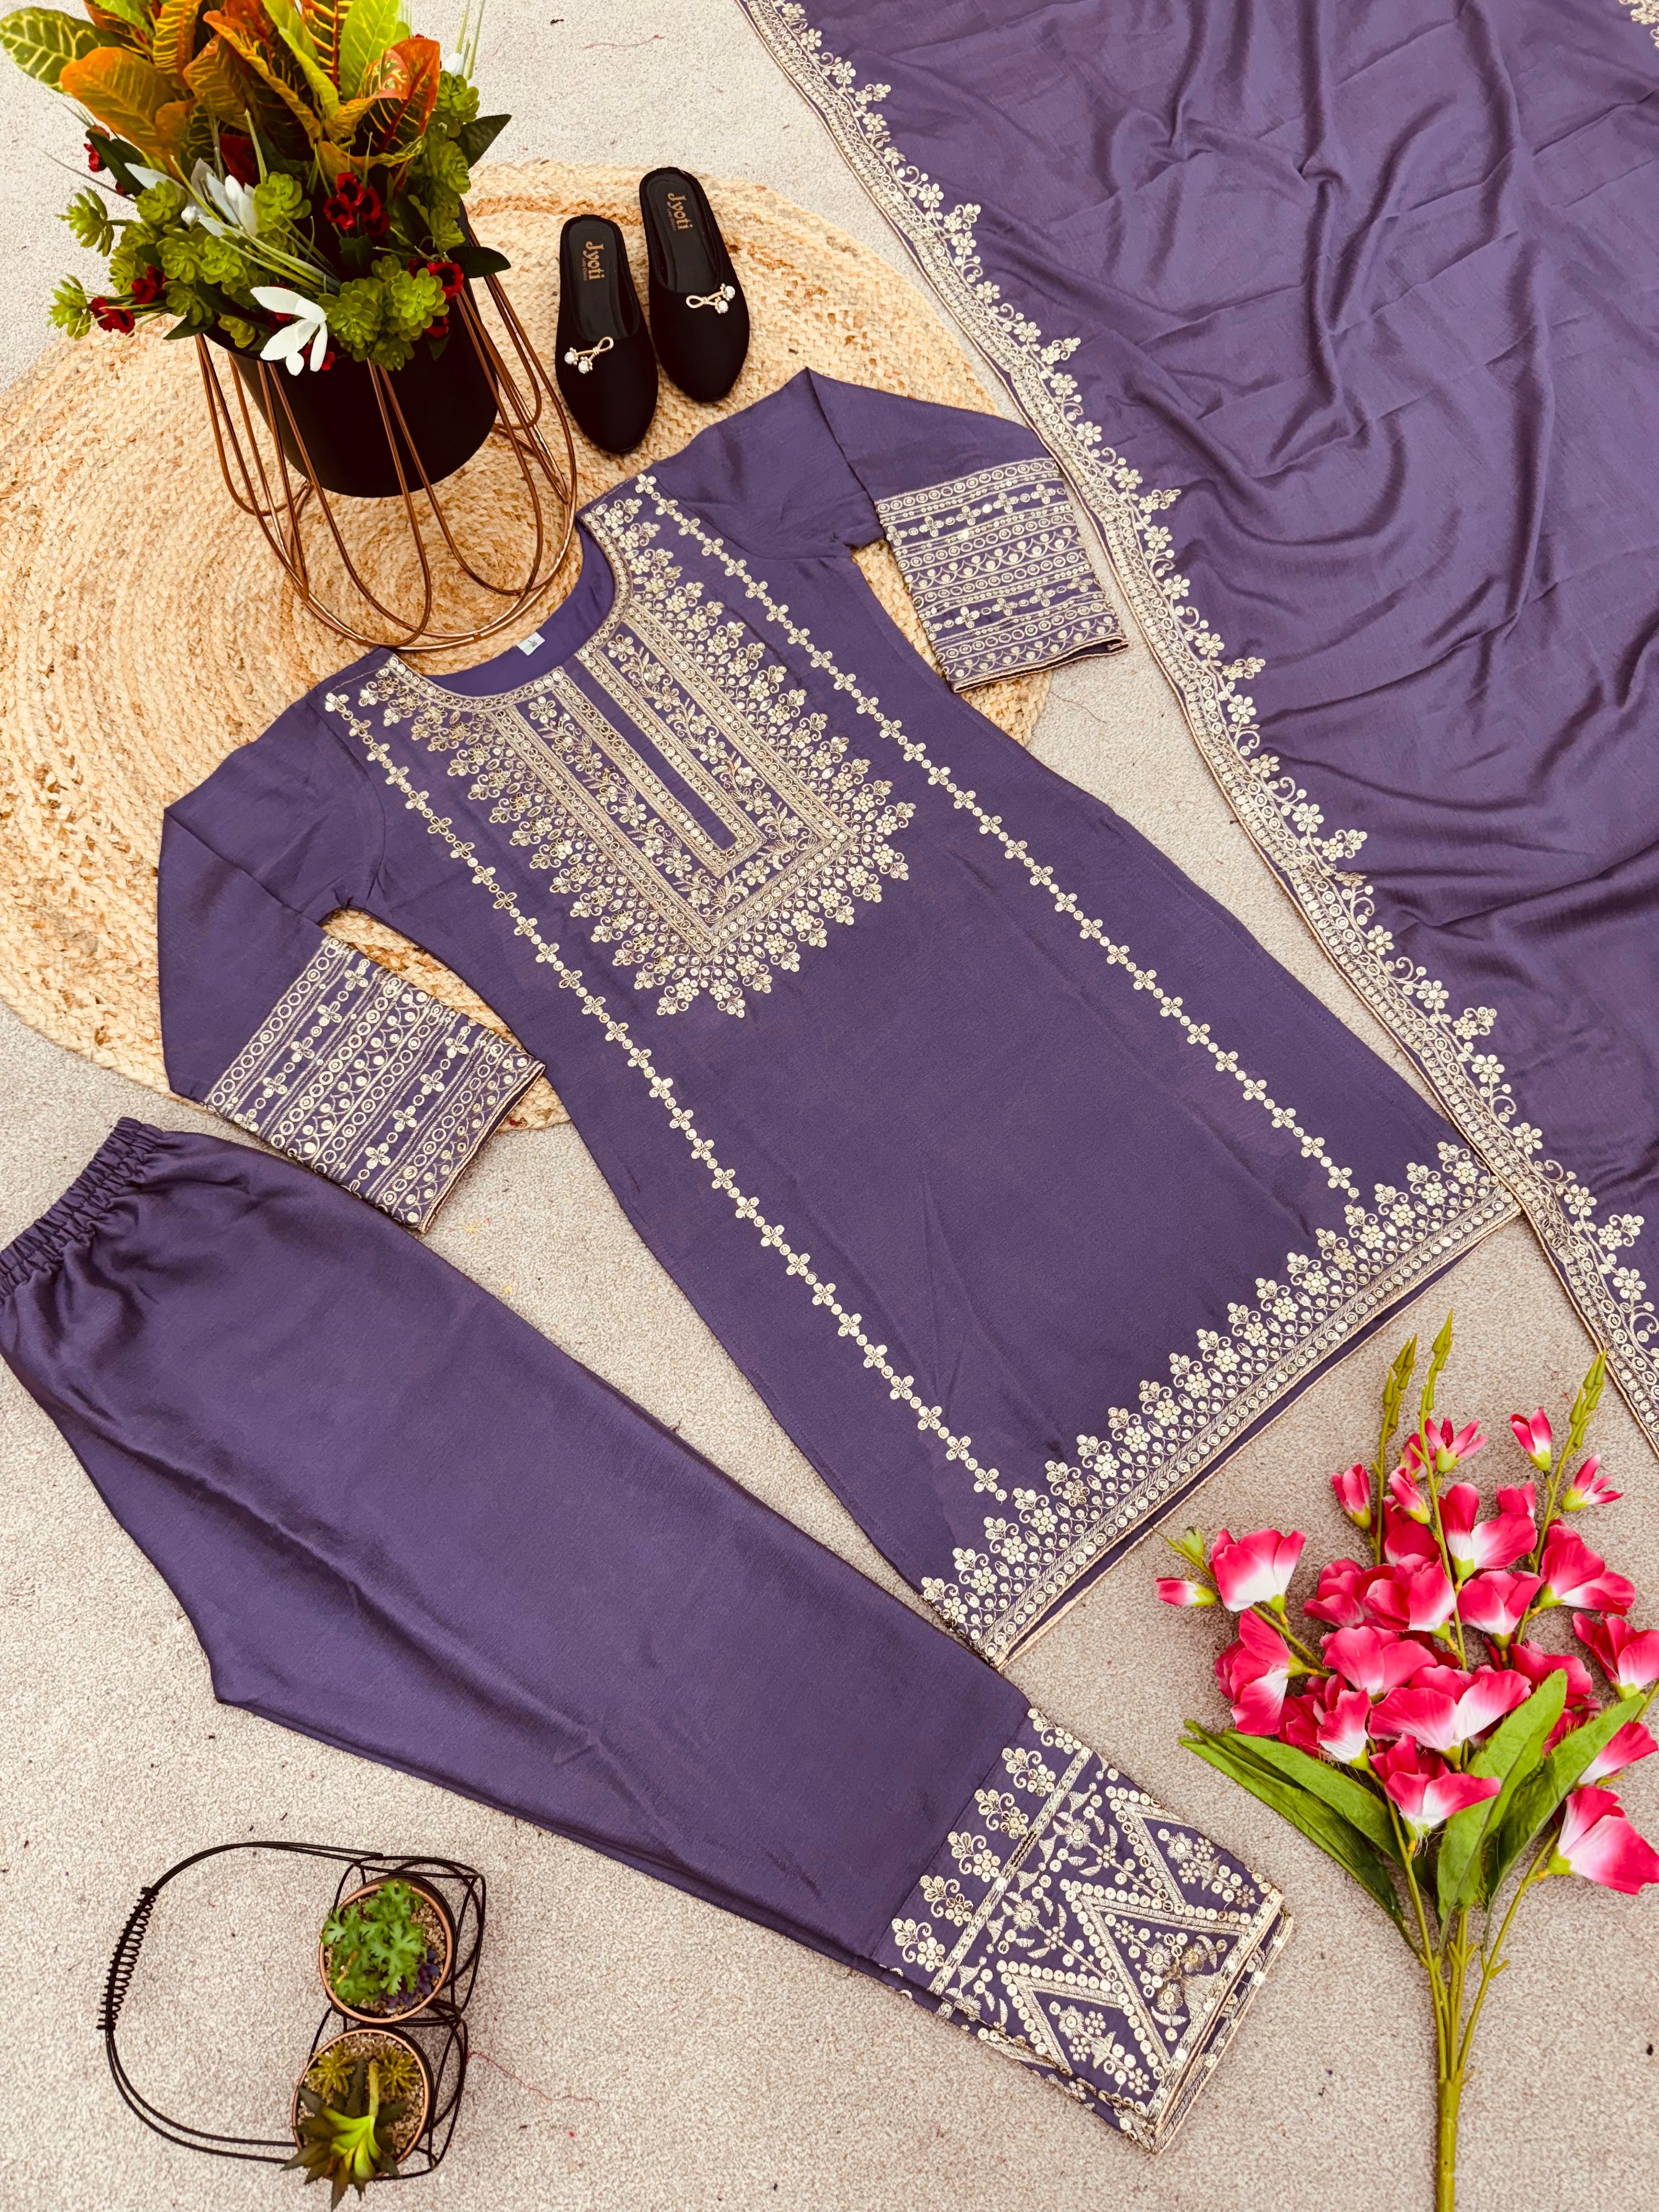 Lavender Color Full Sleeve Embroidery Work Salwar Suit